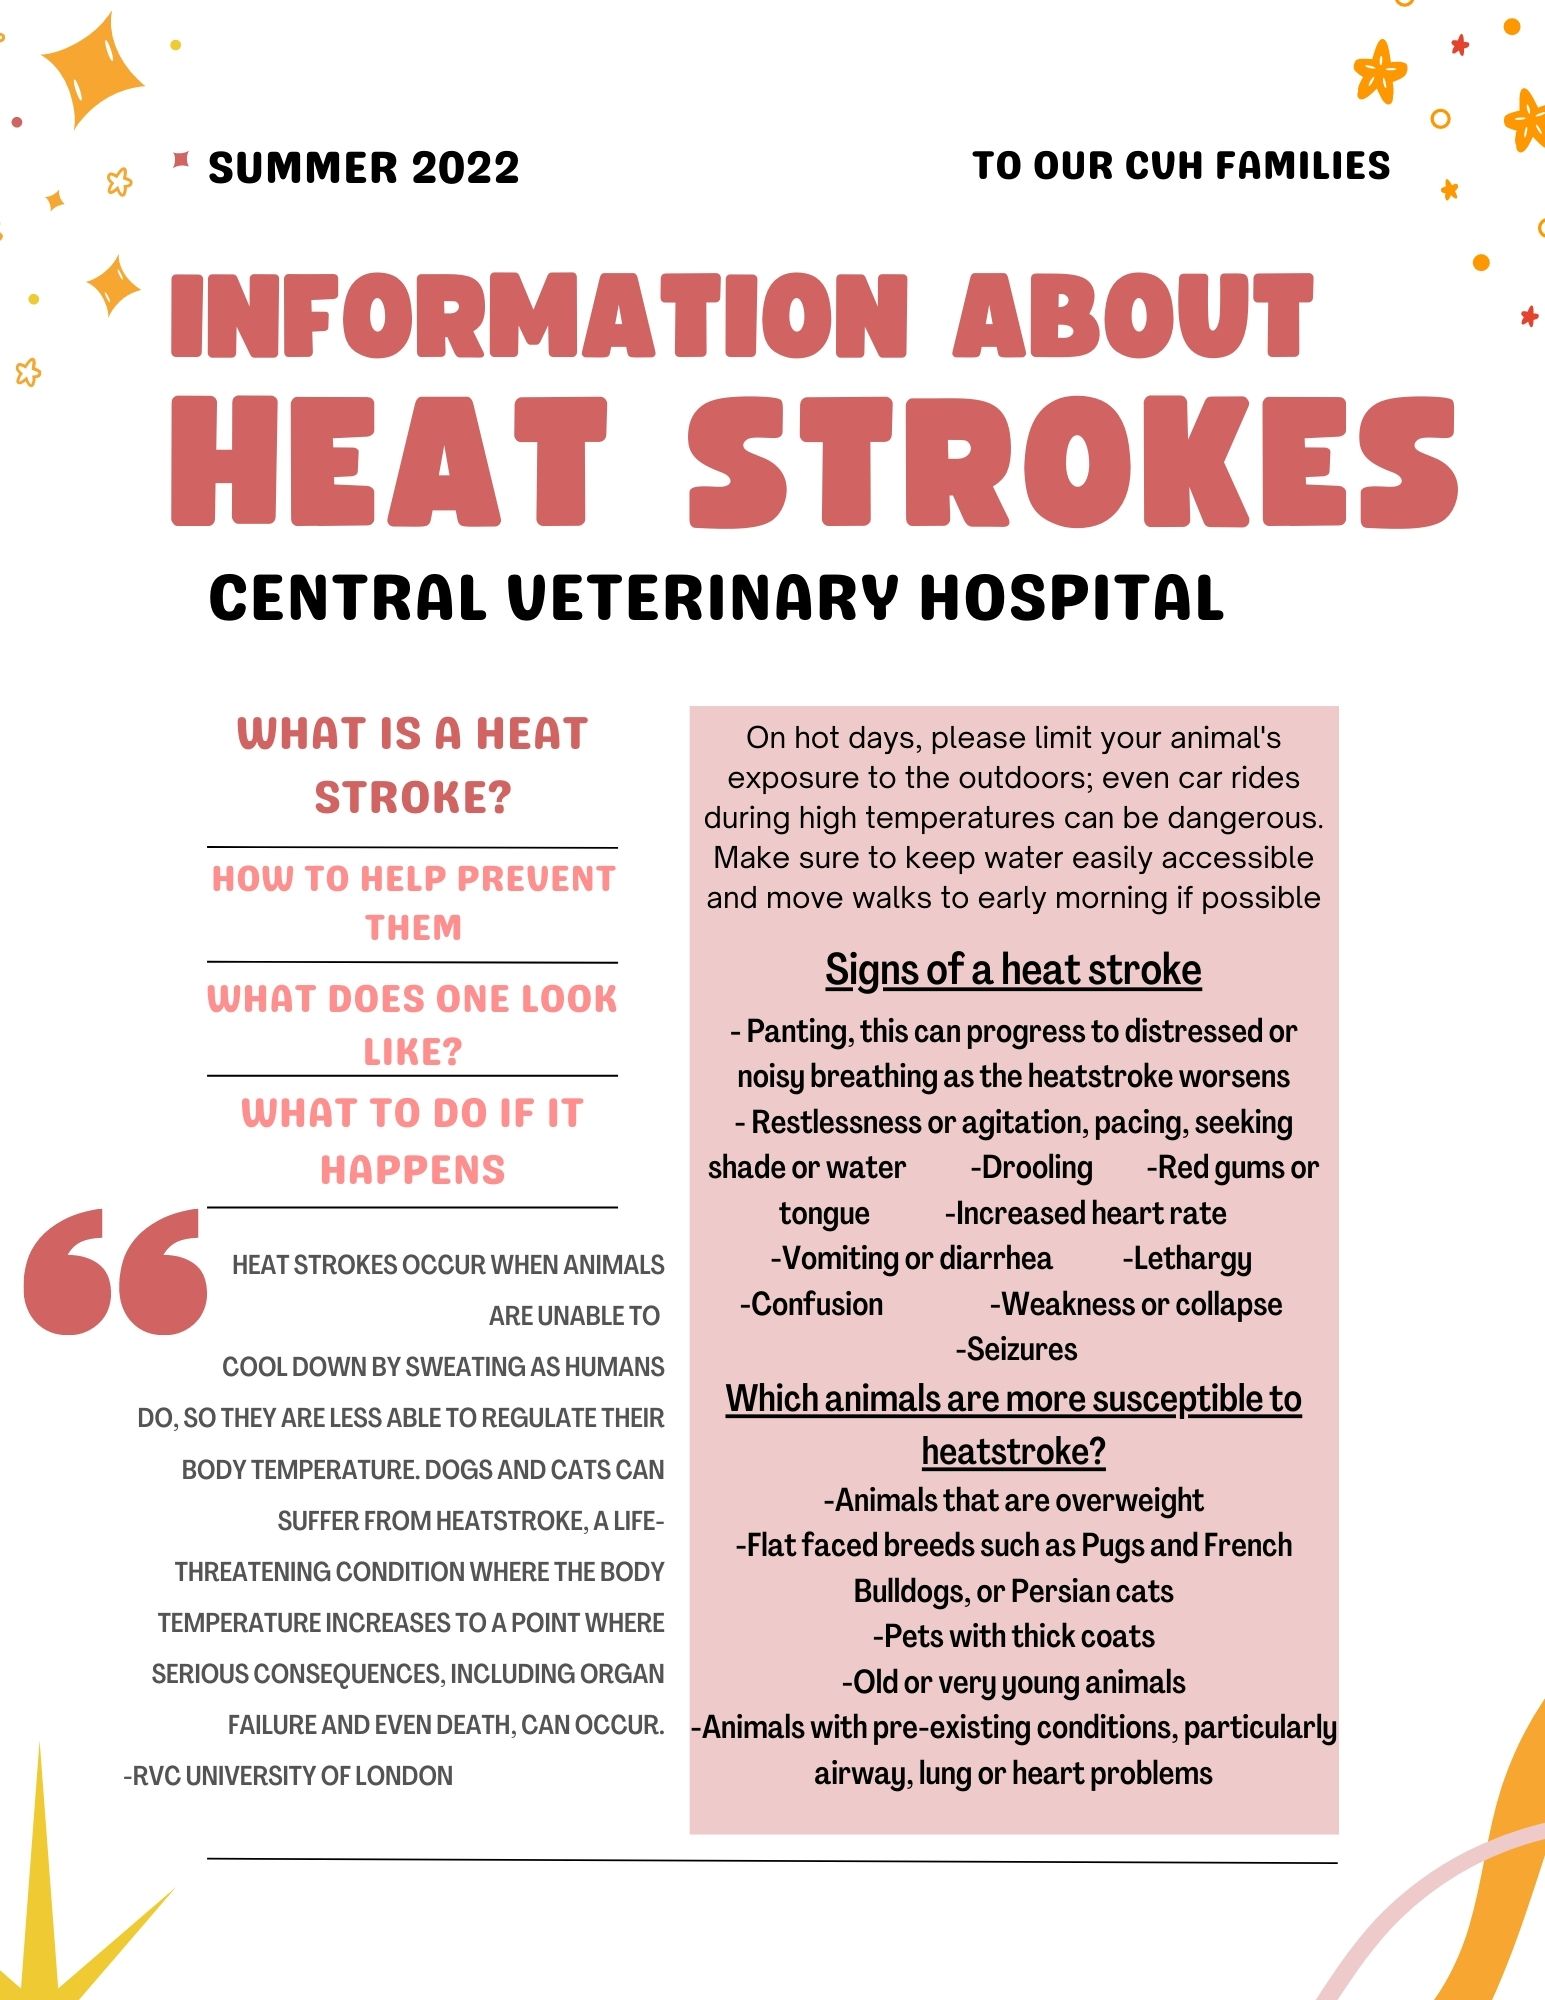 Central Veterinary Hospital